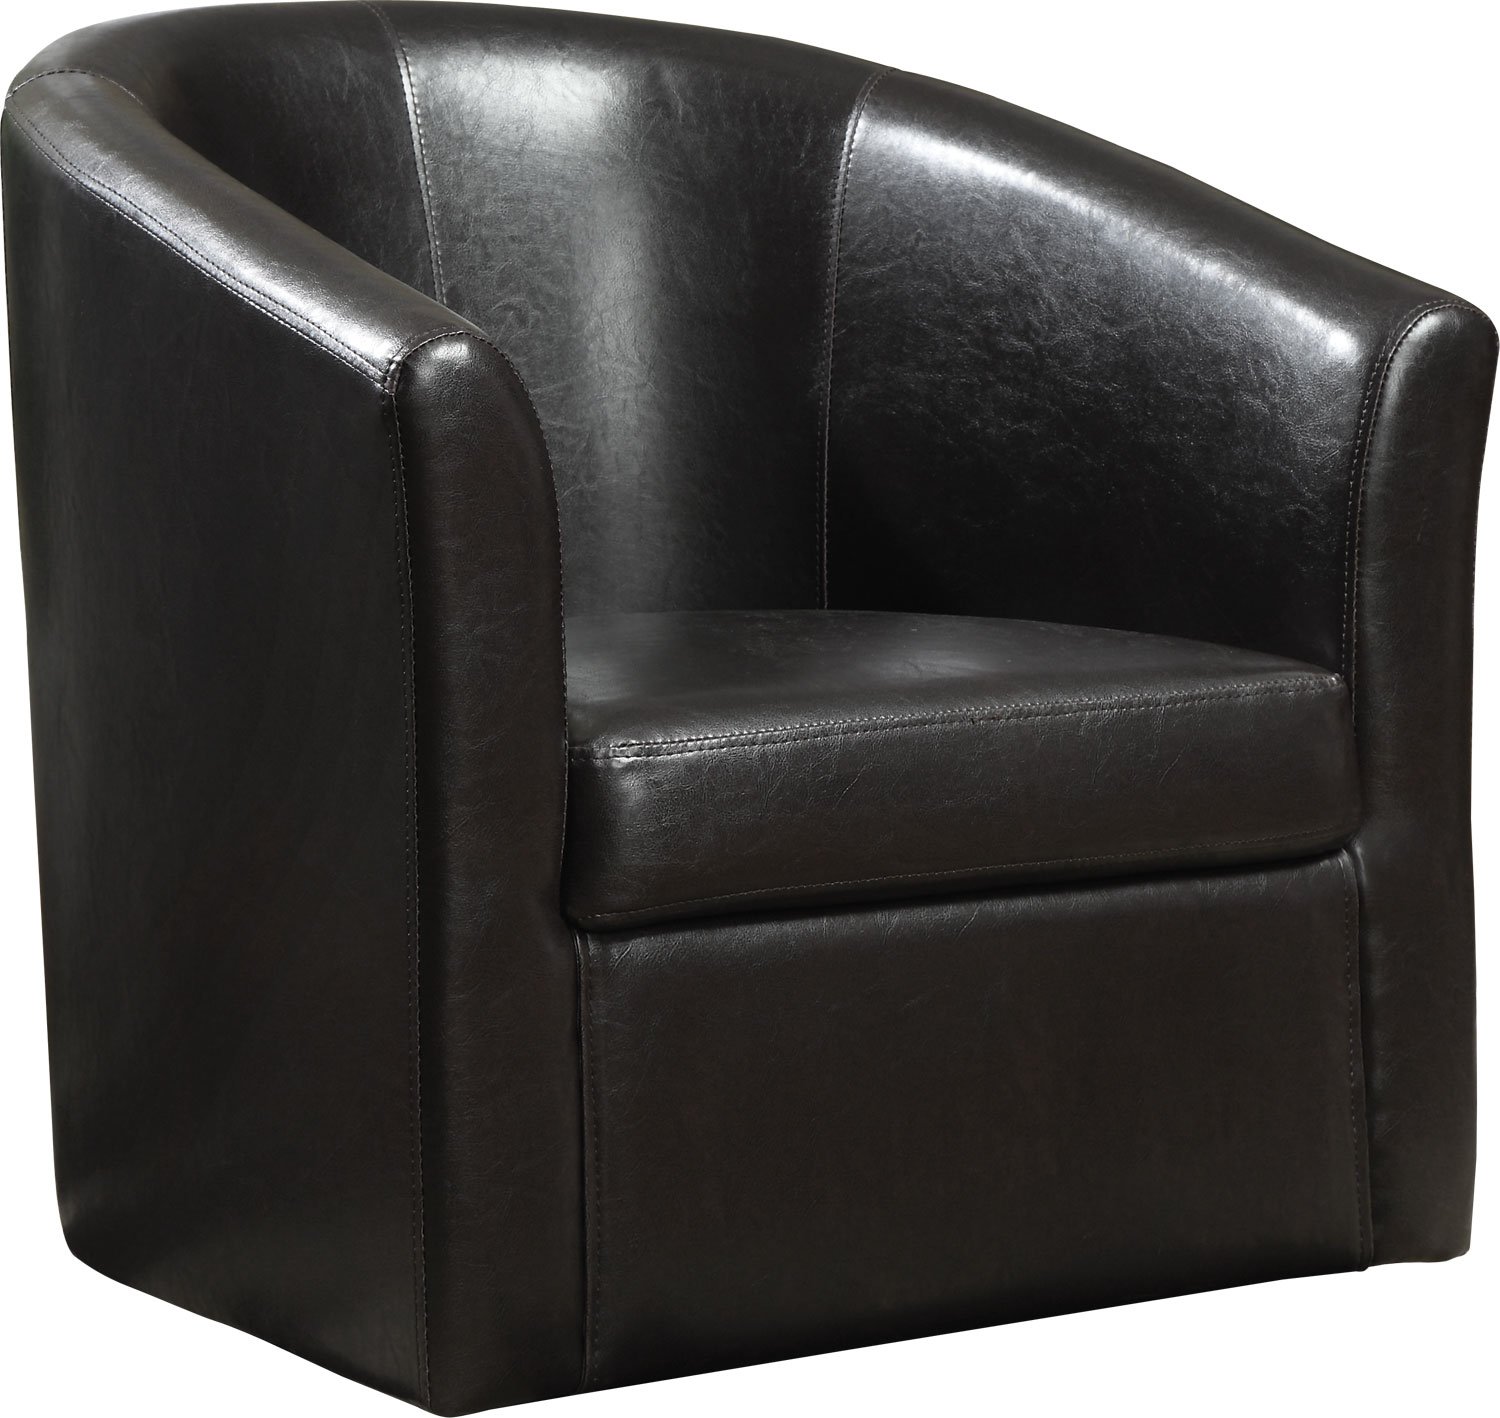 Barrel Swivel Chair : 79% OFF - Crate & Barrel Crate & Barrel Leather